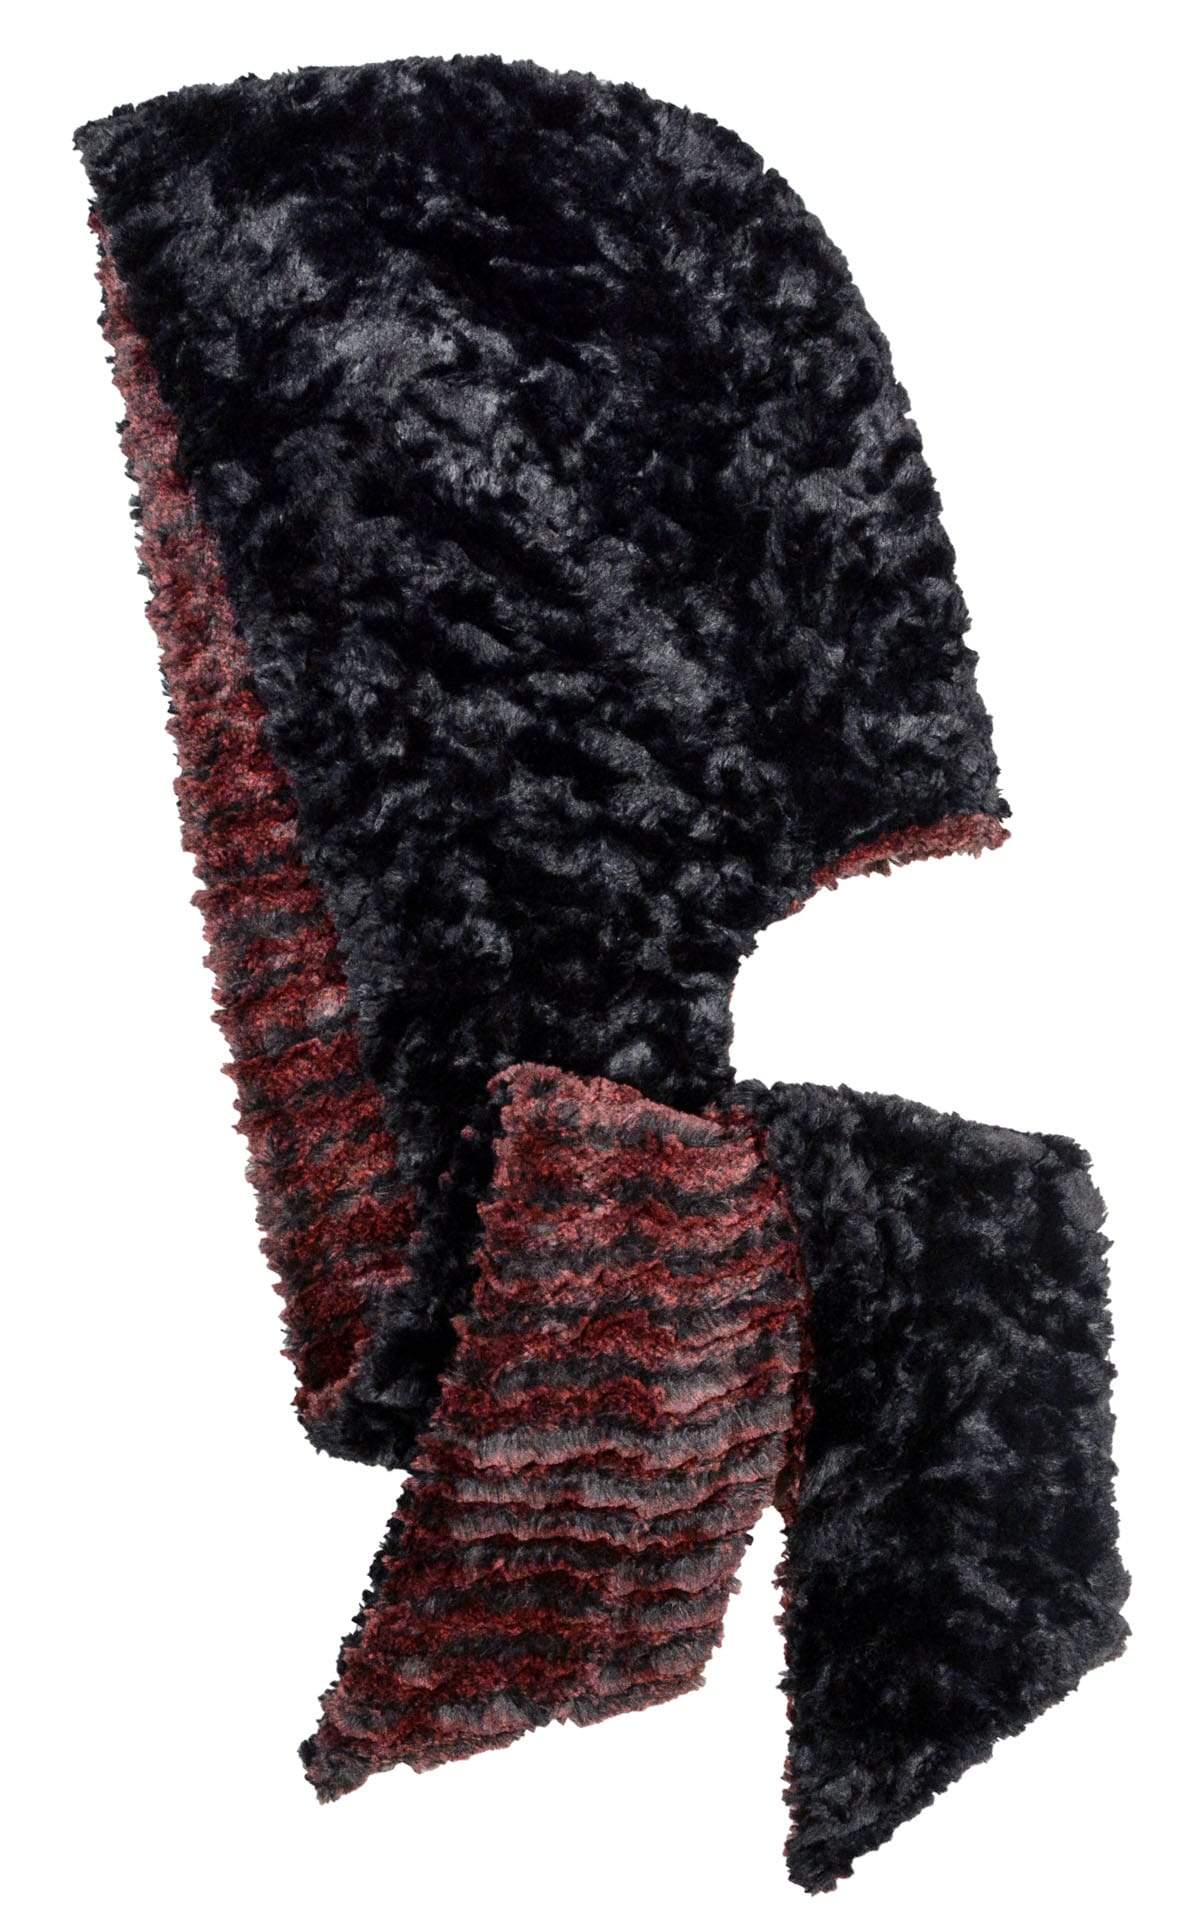 Hoody Scarf - Desert Sand Faux Fur with Cuddly Fur in Black